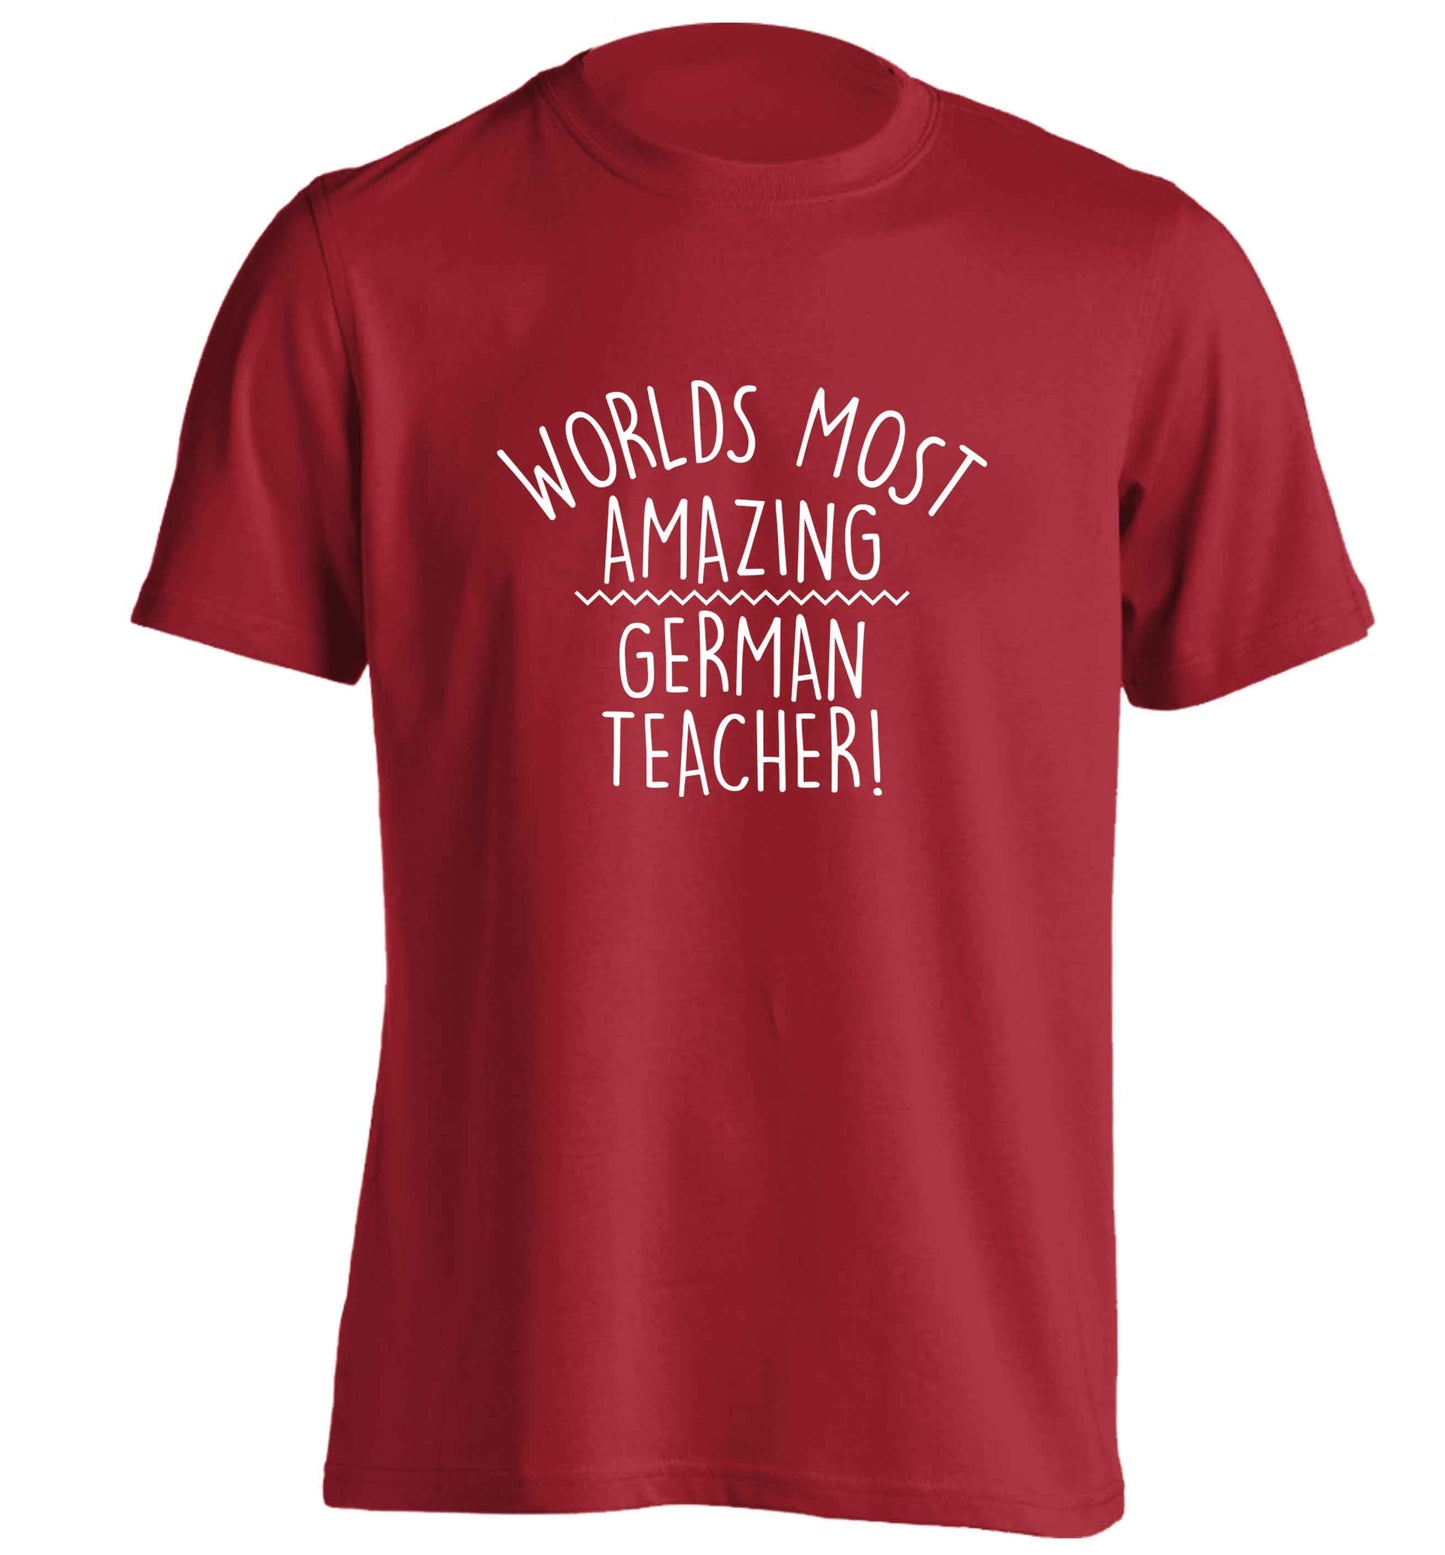 Worlds most amazing German teacher adults unisex red Tshirt 2XL